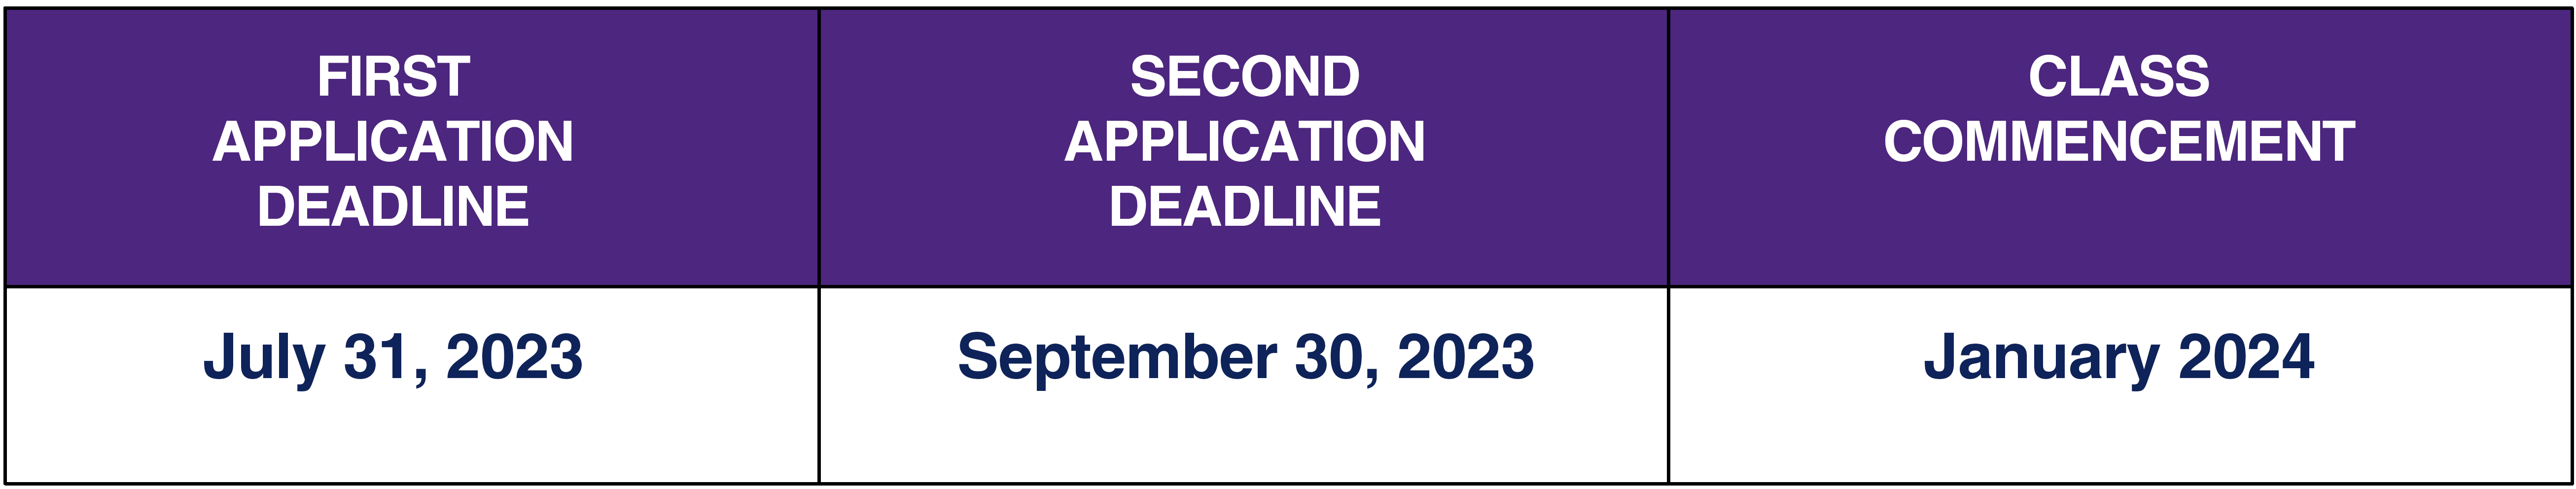 application-deadline_002